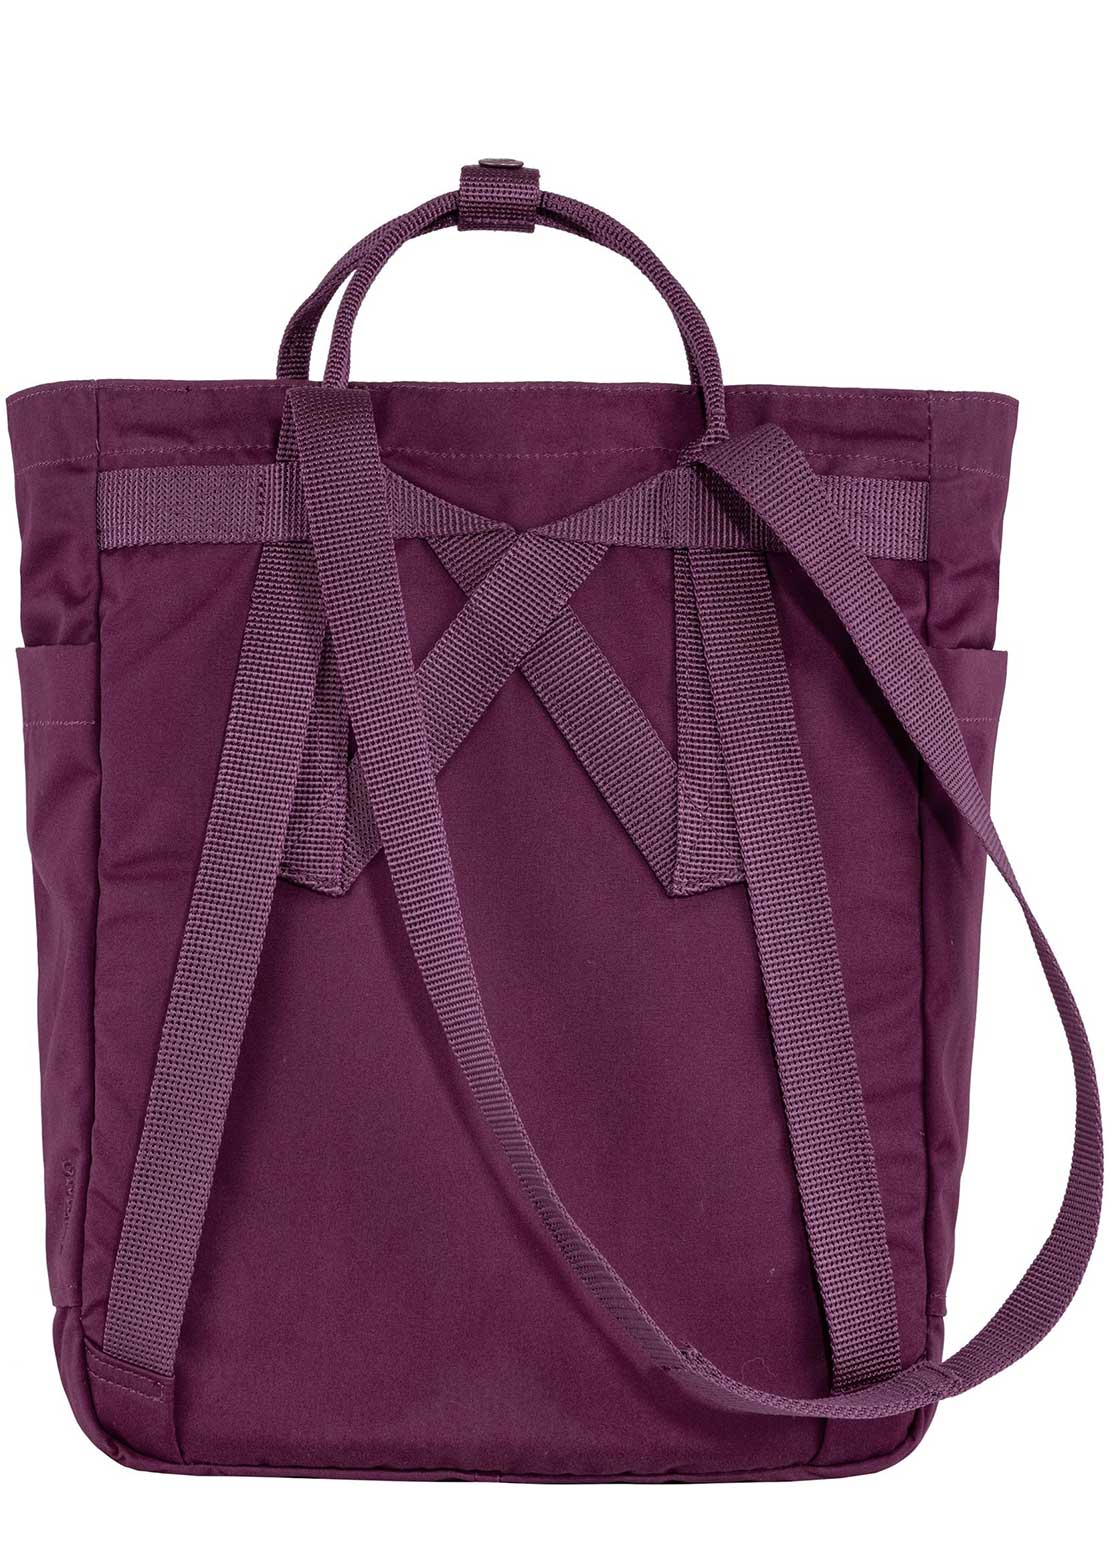 Fjallraven Kanken Tote Bag Royal Purple